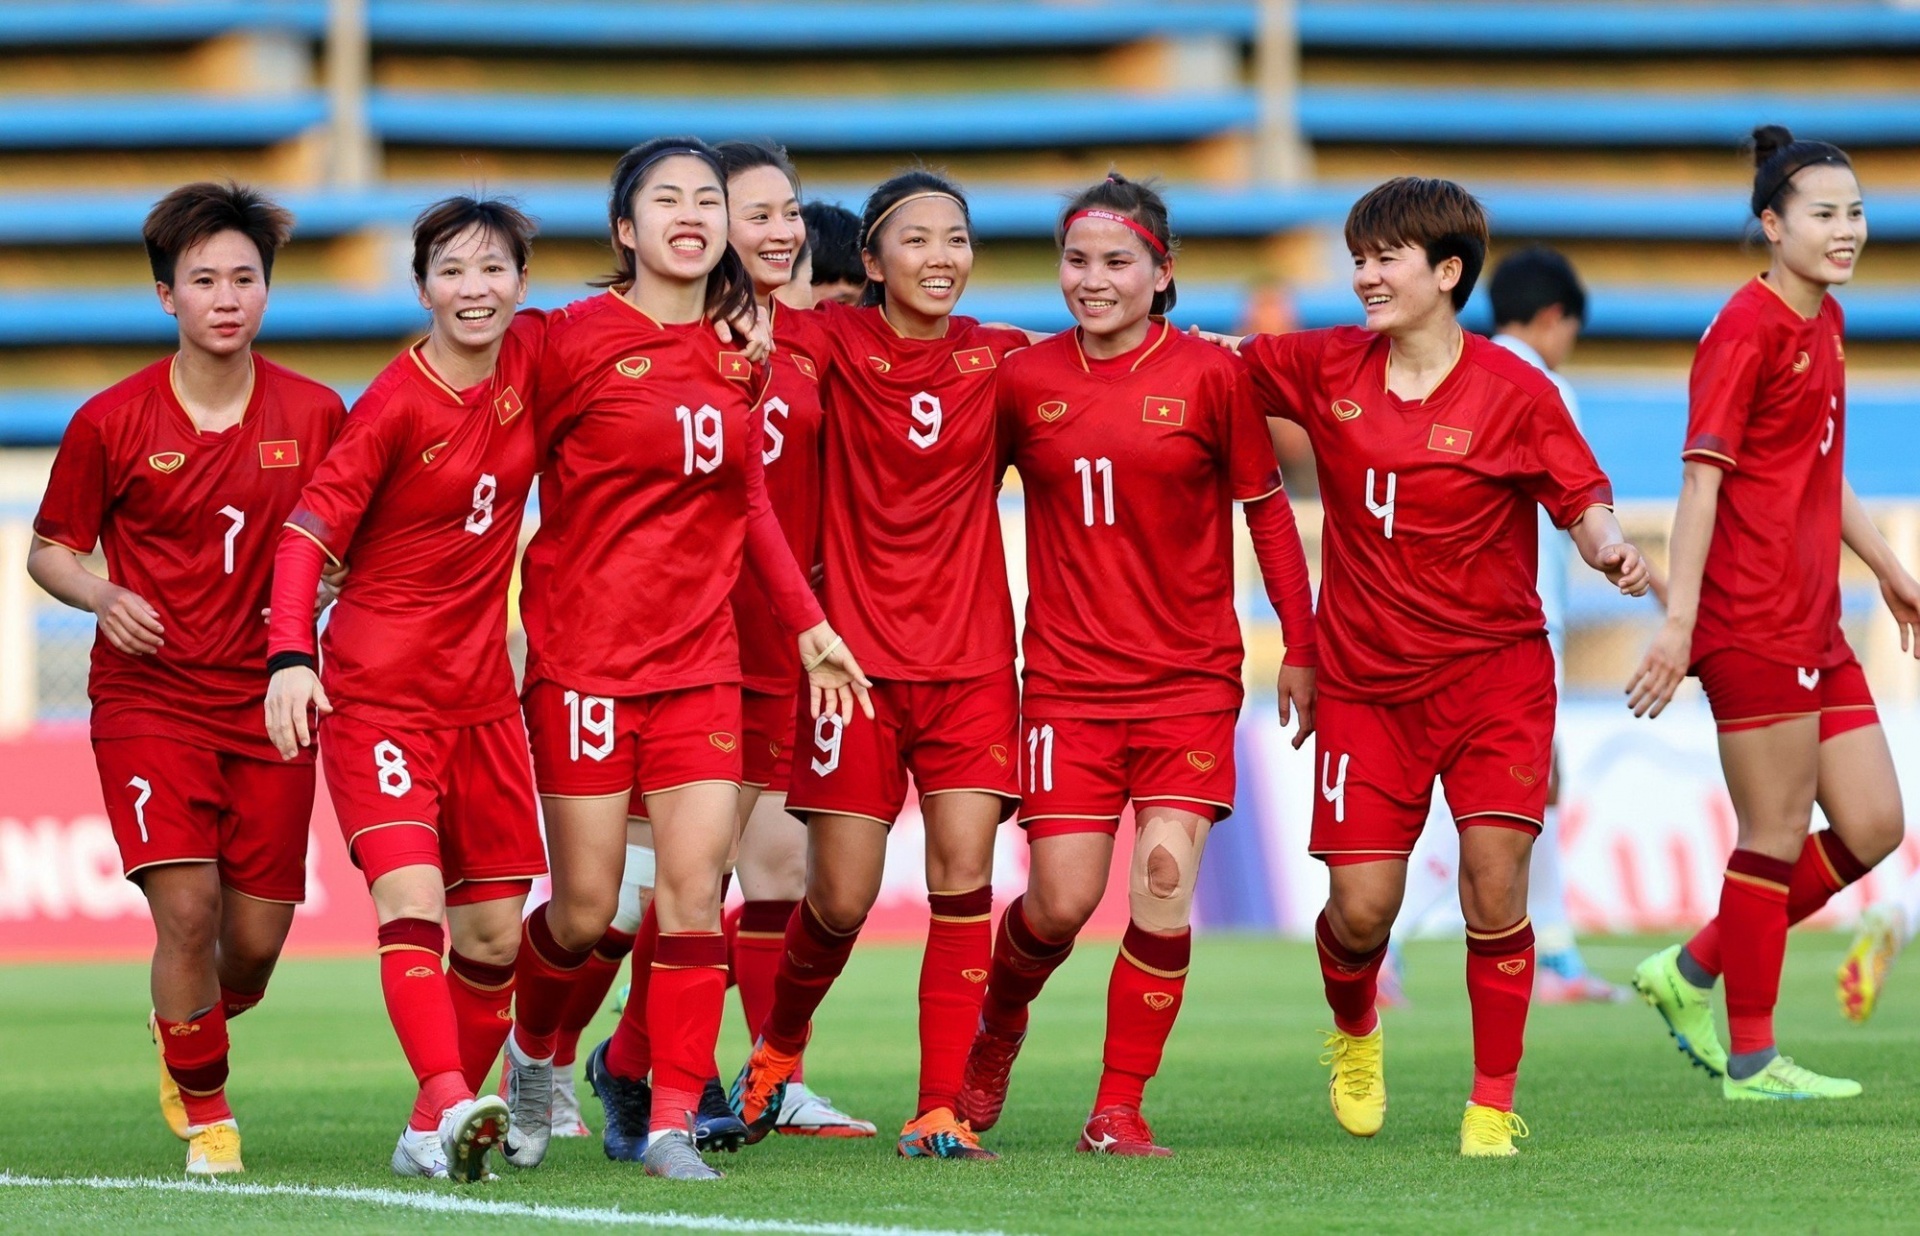 Gala for Vietnamese women’s football team ahead of World Cup